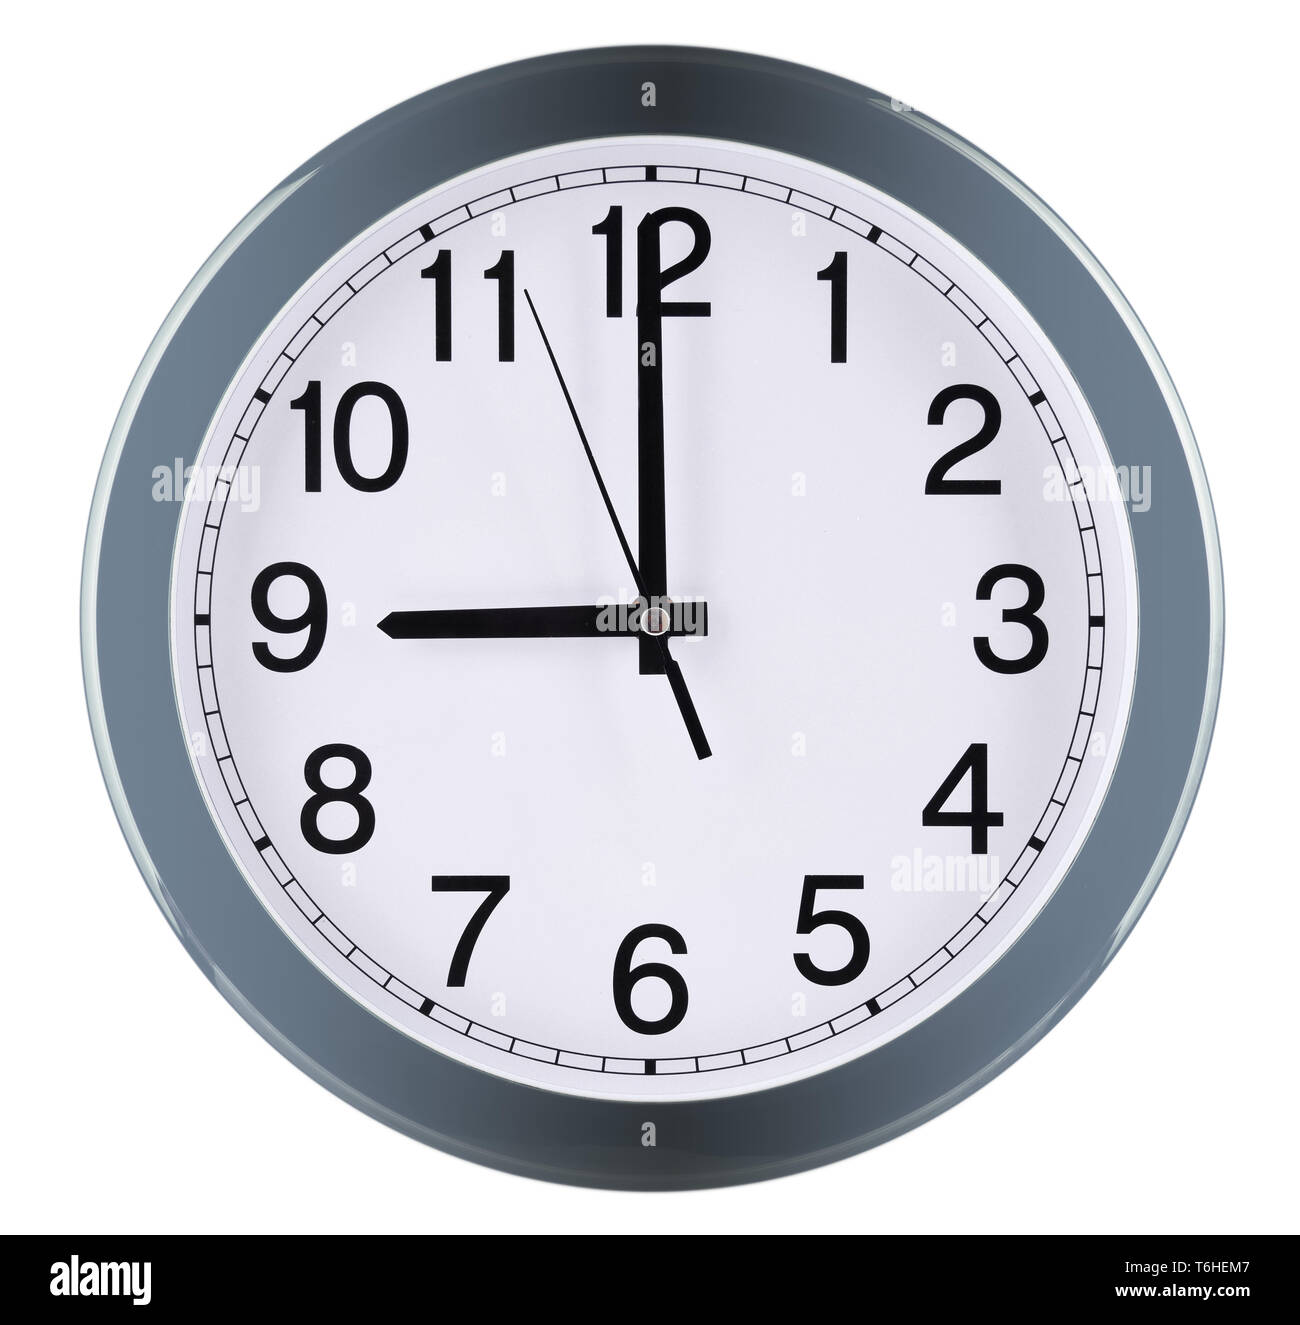 Wall clock isolated on white background. Nine oclock Stock Photo - Alamy